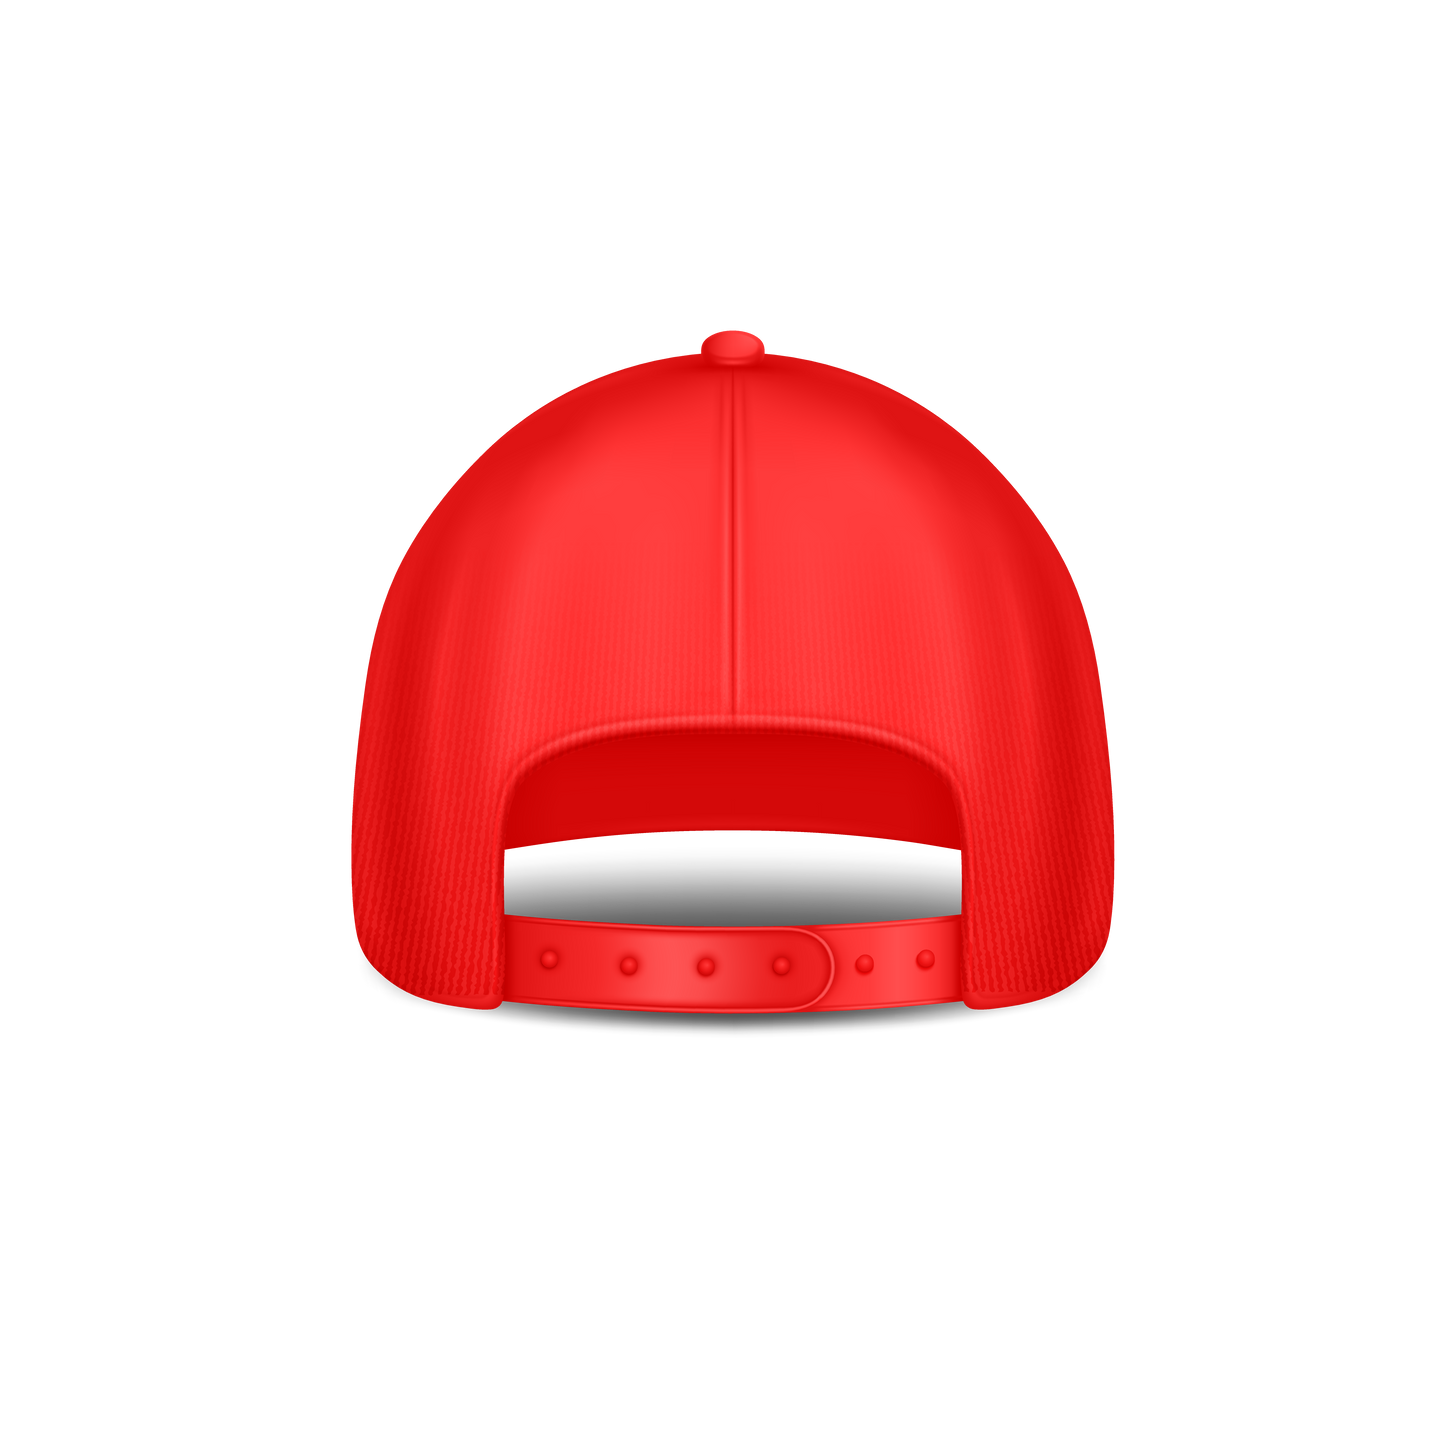 KBT-Xclusive Snapback Red Cap